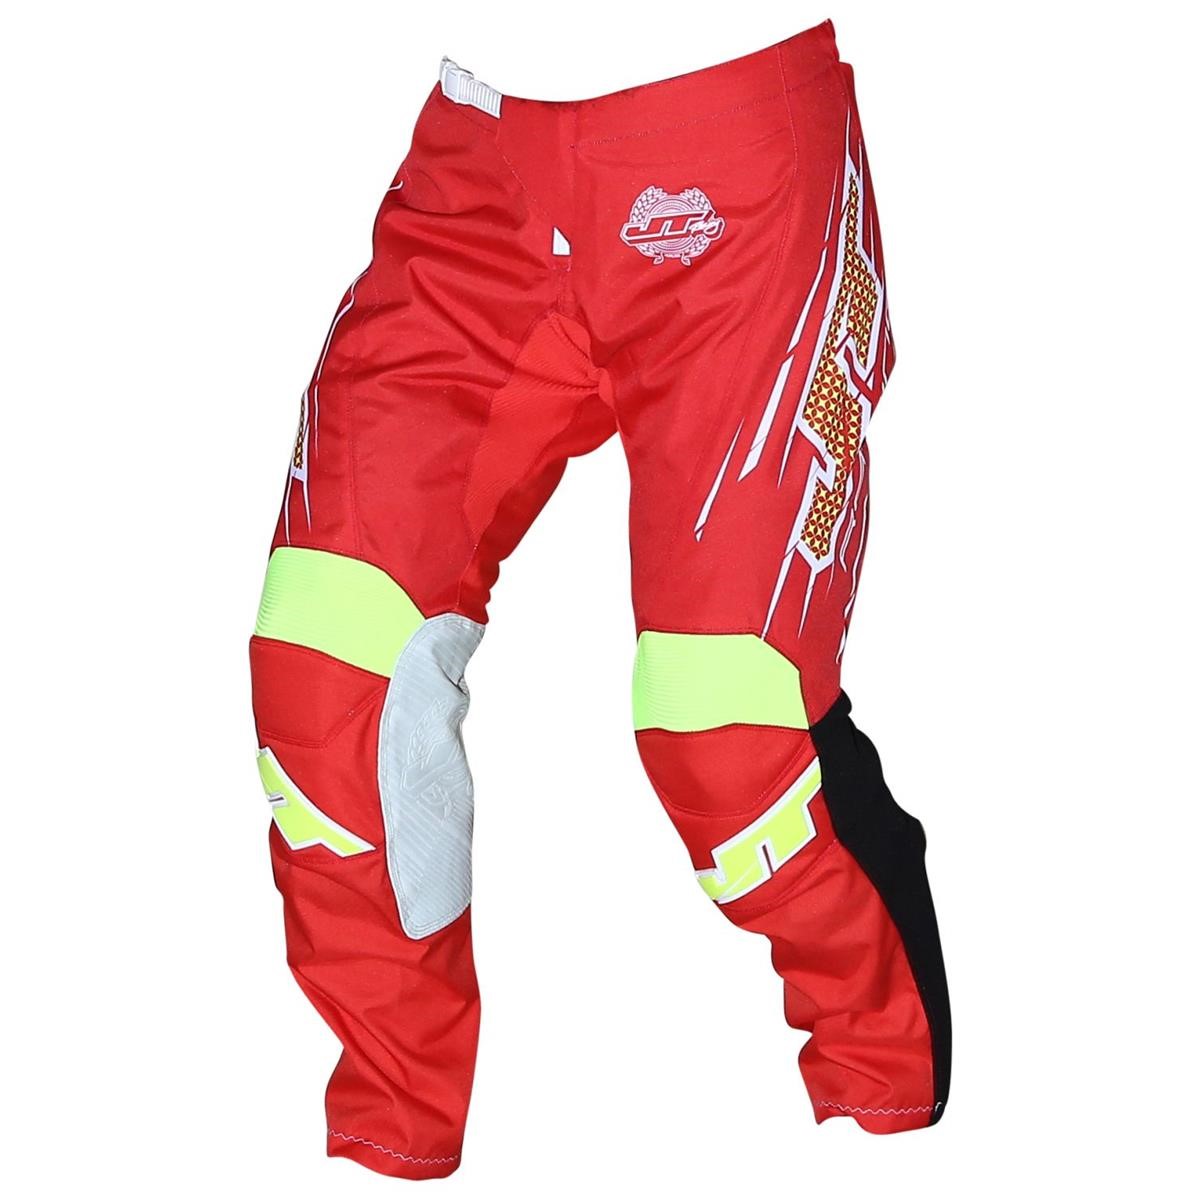 JT Racing USA MX Pants Flex Slasher Red/Neon Yellow